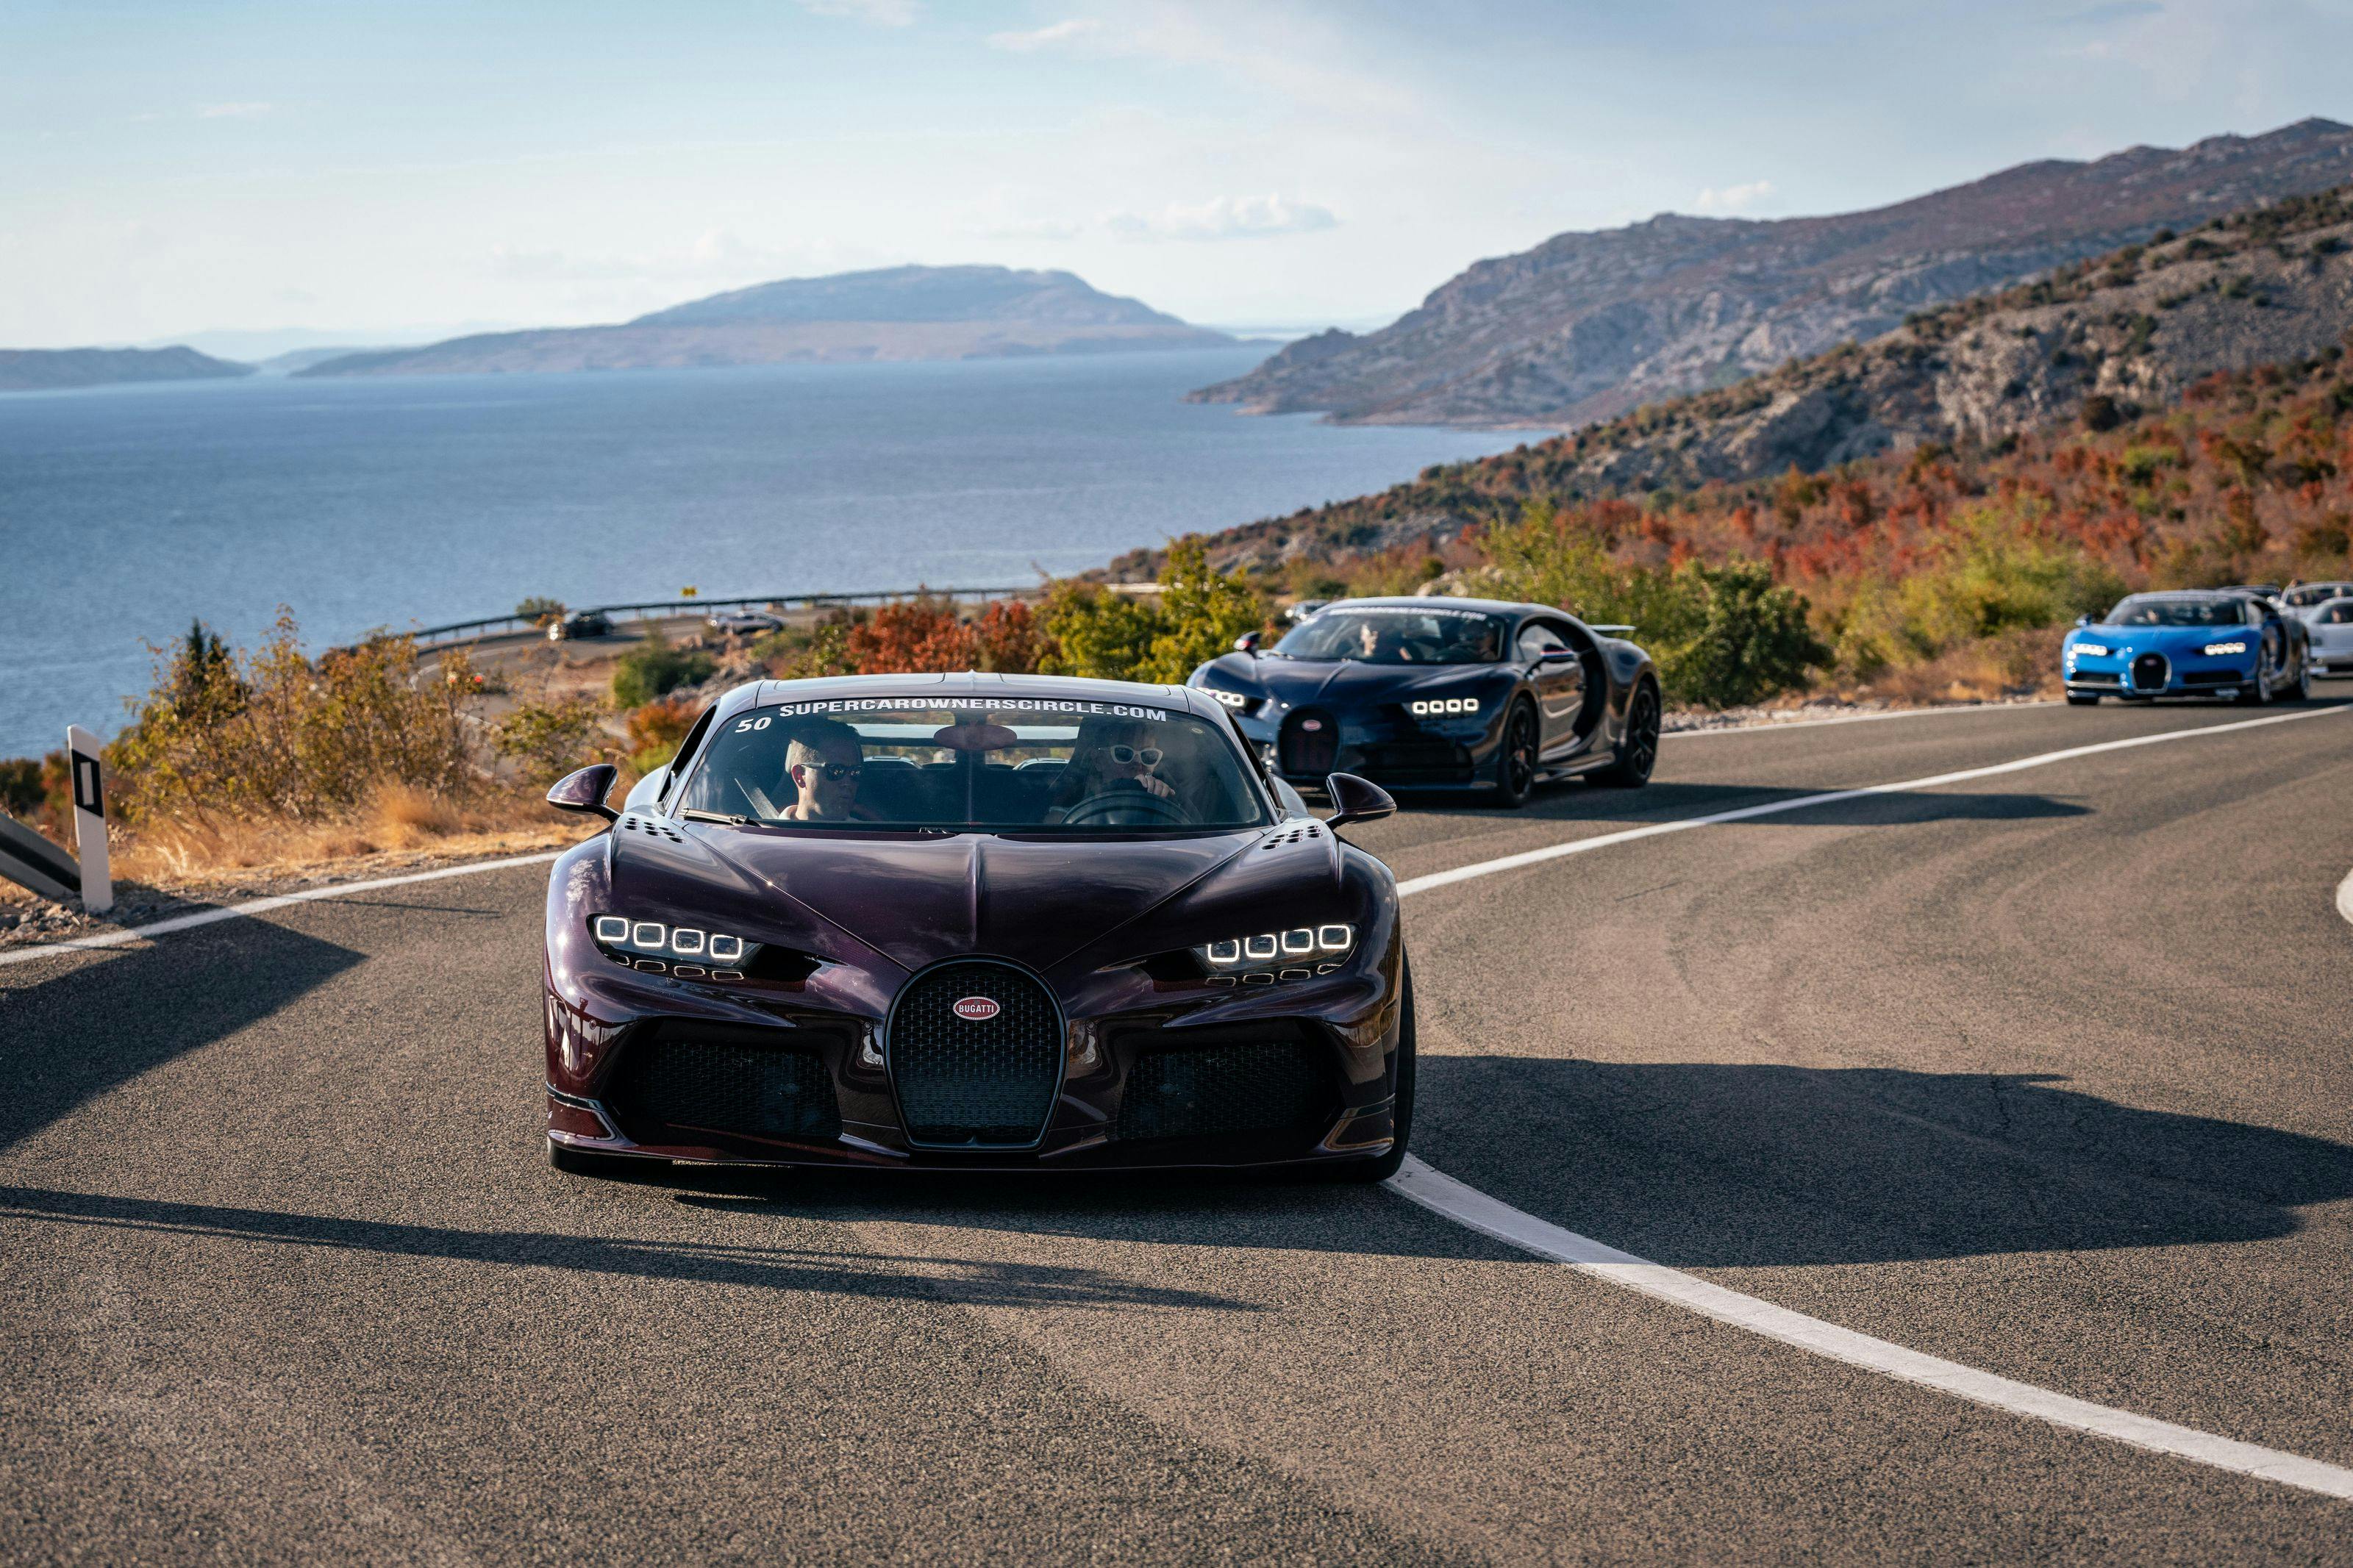 Designed to drive: La Voiture Noire among Bugatti legends at SOC Croatia